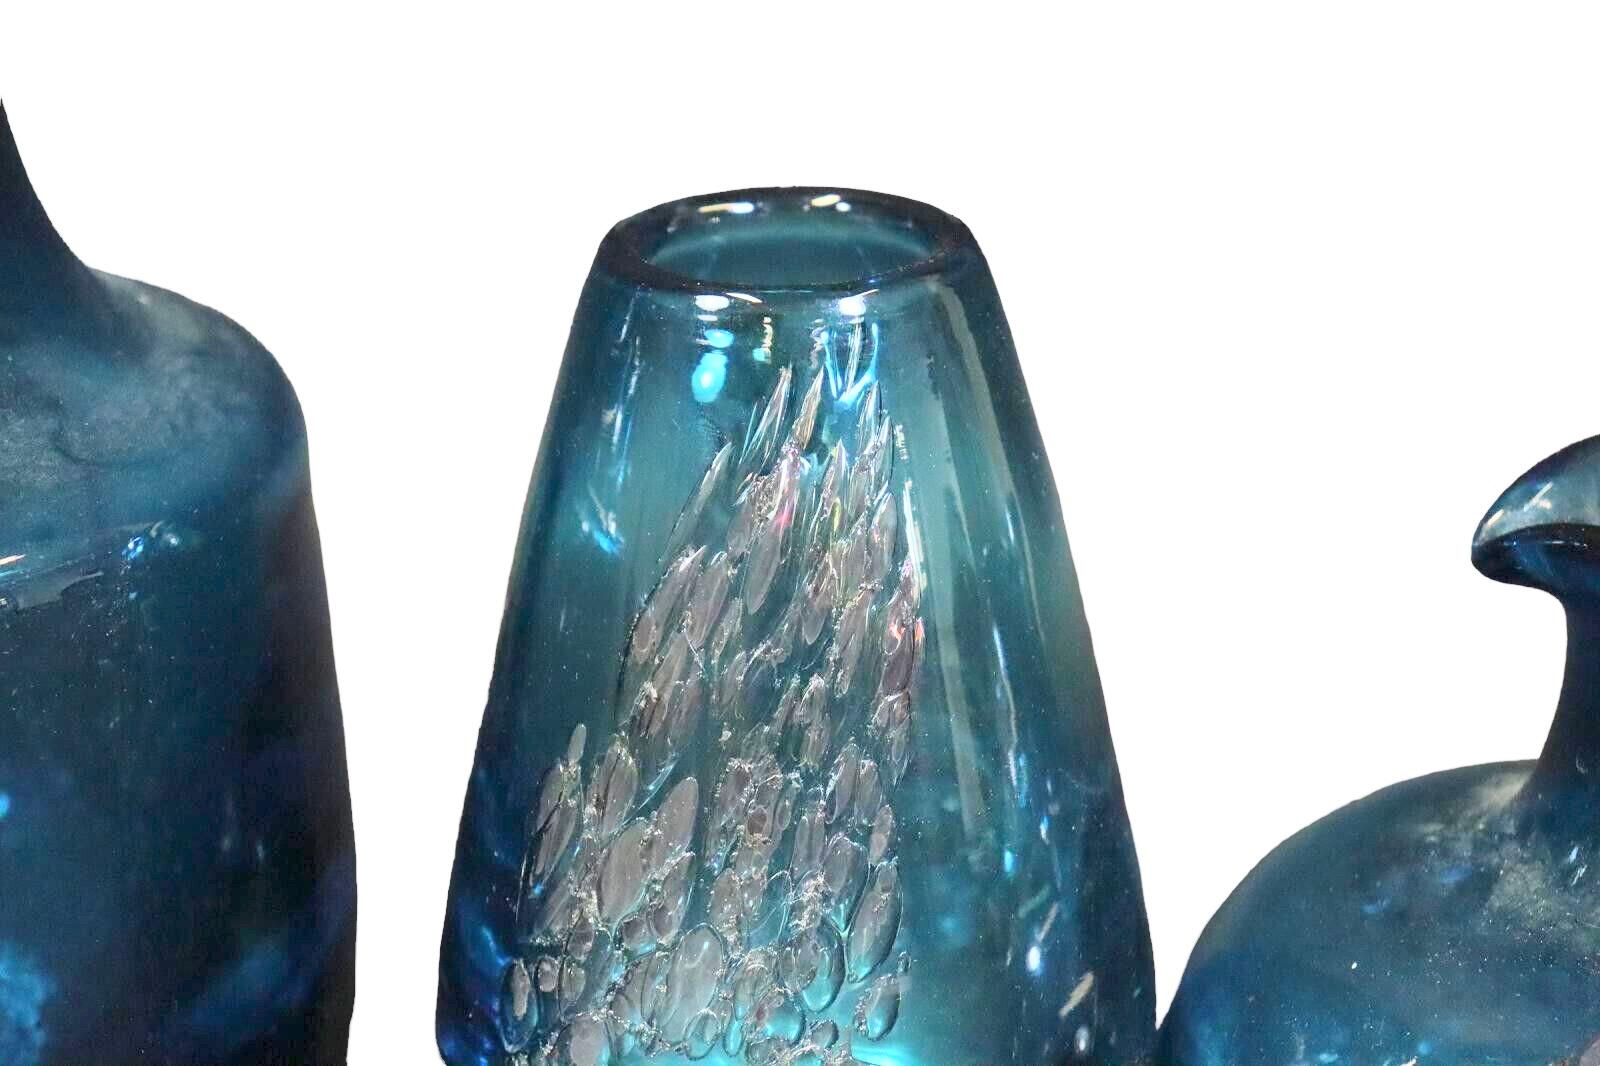 Lot of 5 Blue Swirl Vases Florida Design Heinrich Löffelhardt 60s Pop Art For Sale 1